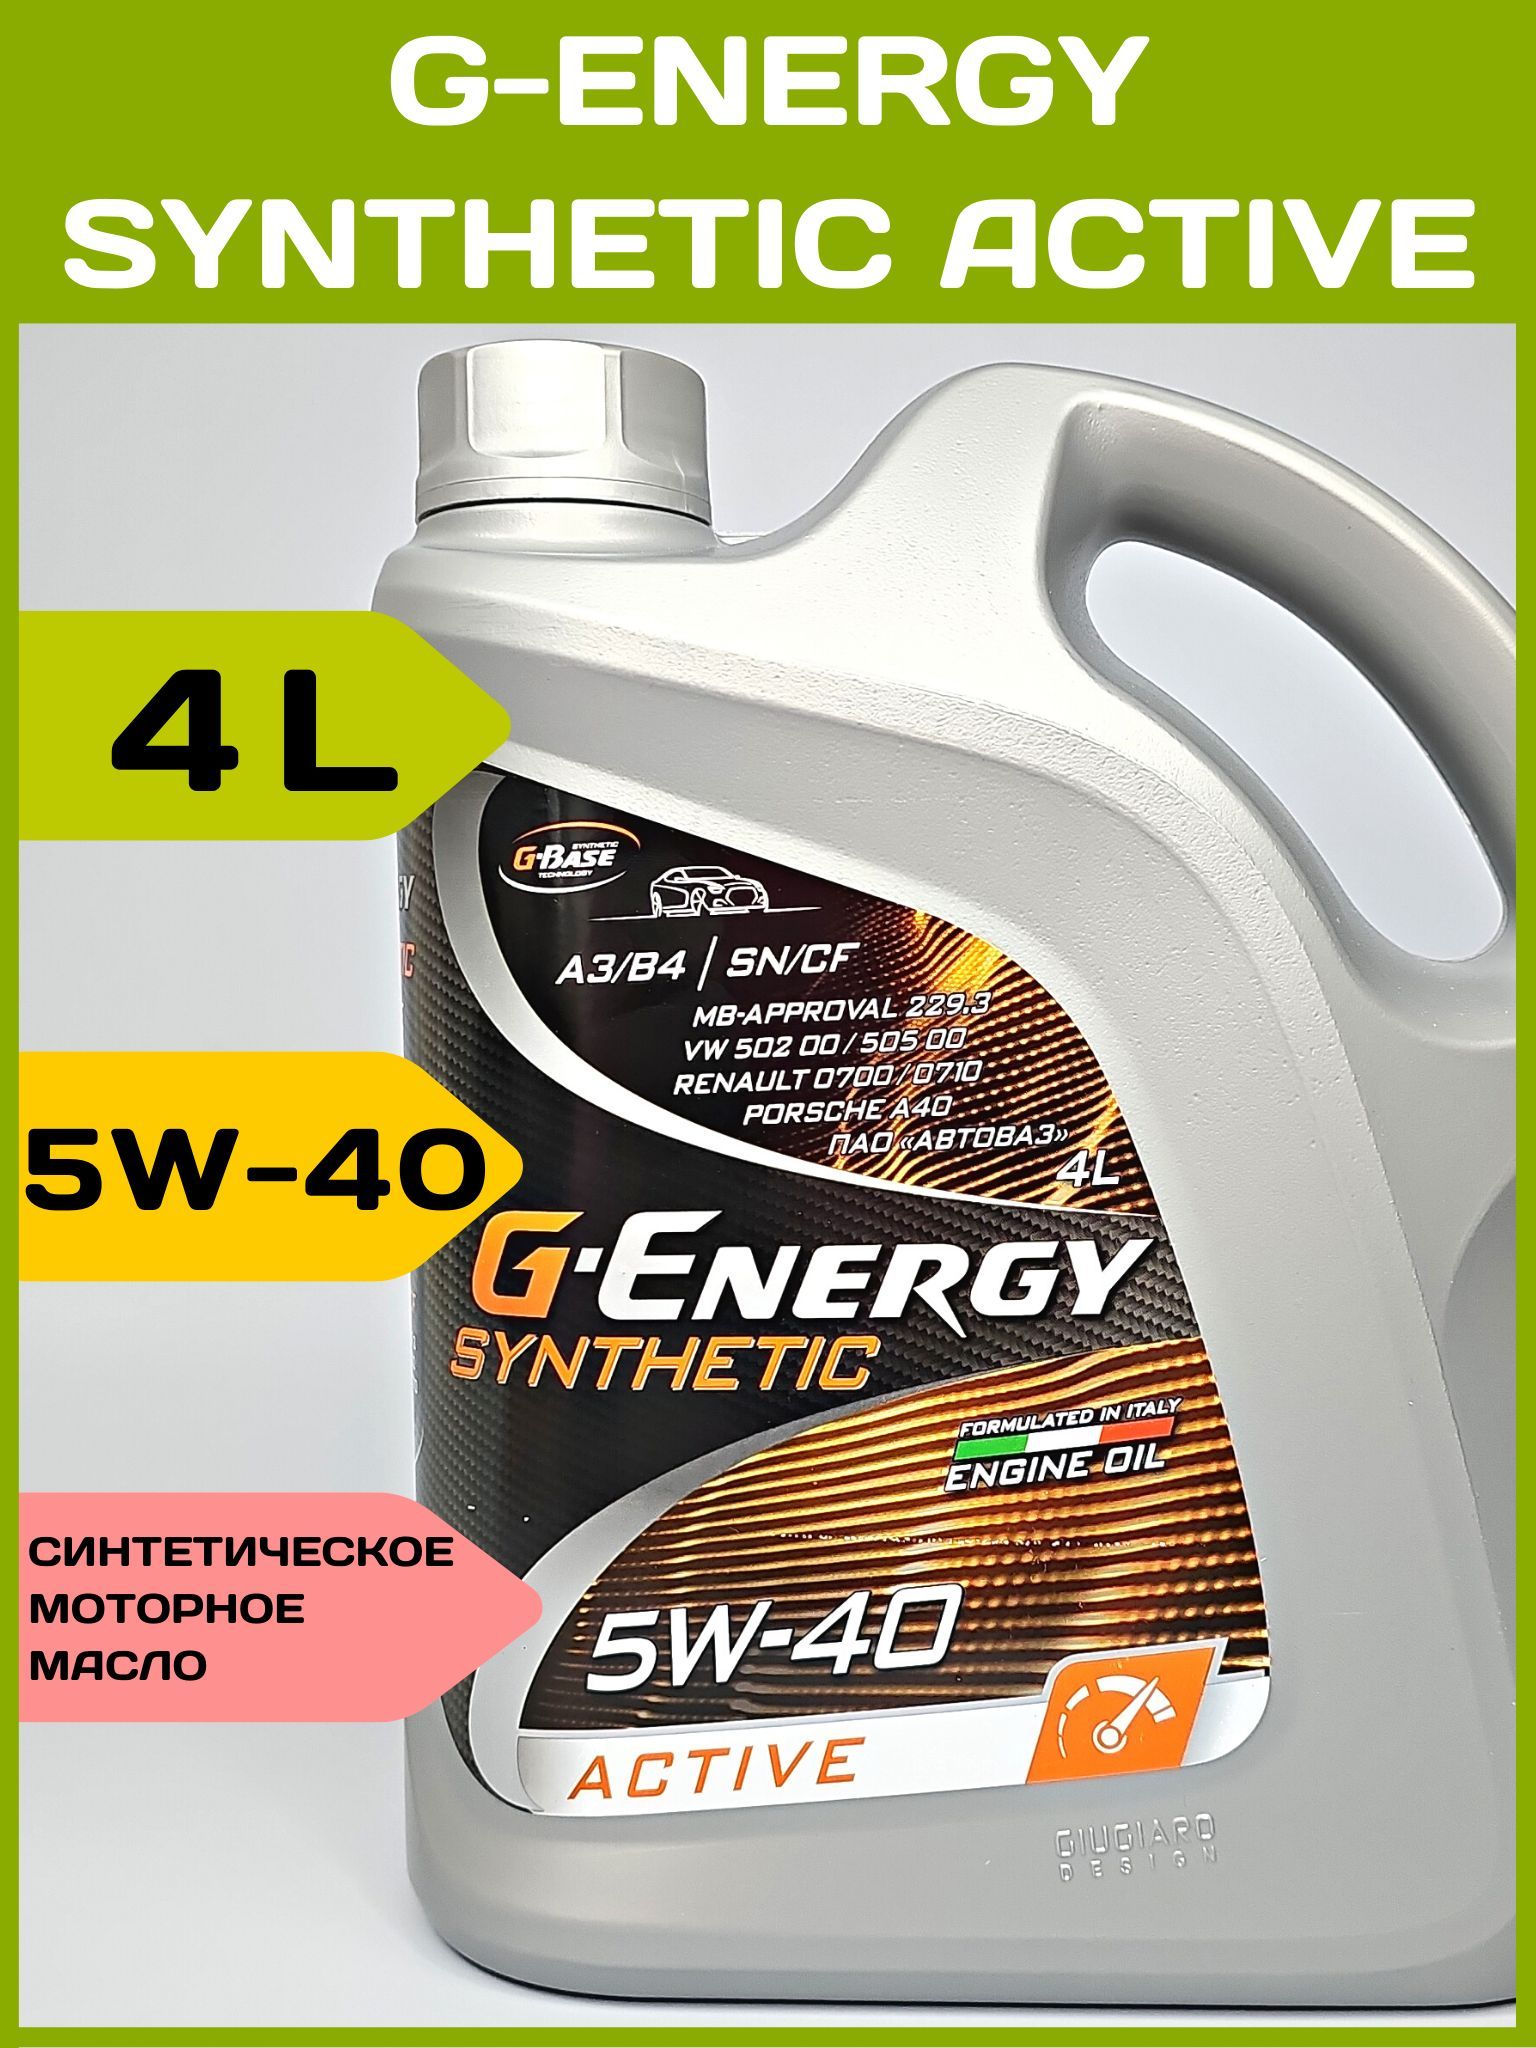 Масло g energy synthetic 5w 40. G Energy 5w40 Актив. G-Energy Synthetic Active 5w-40. Масло g Energy 5w40 синтетика. G-Energy Synthetic Active 5w-30.